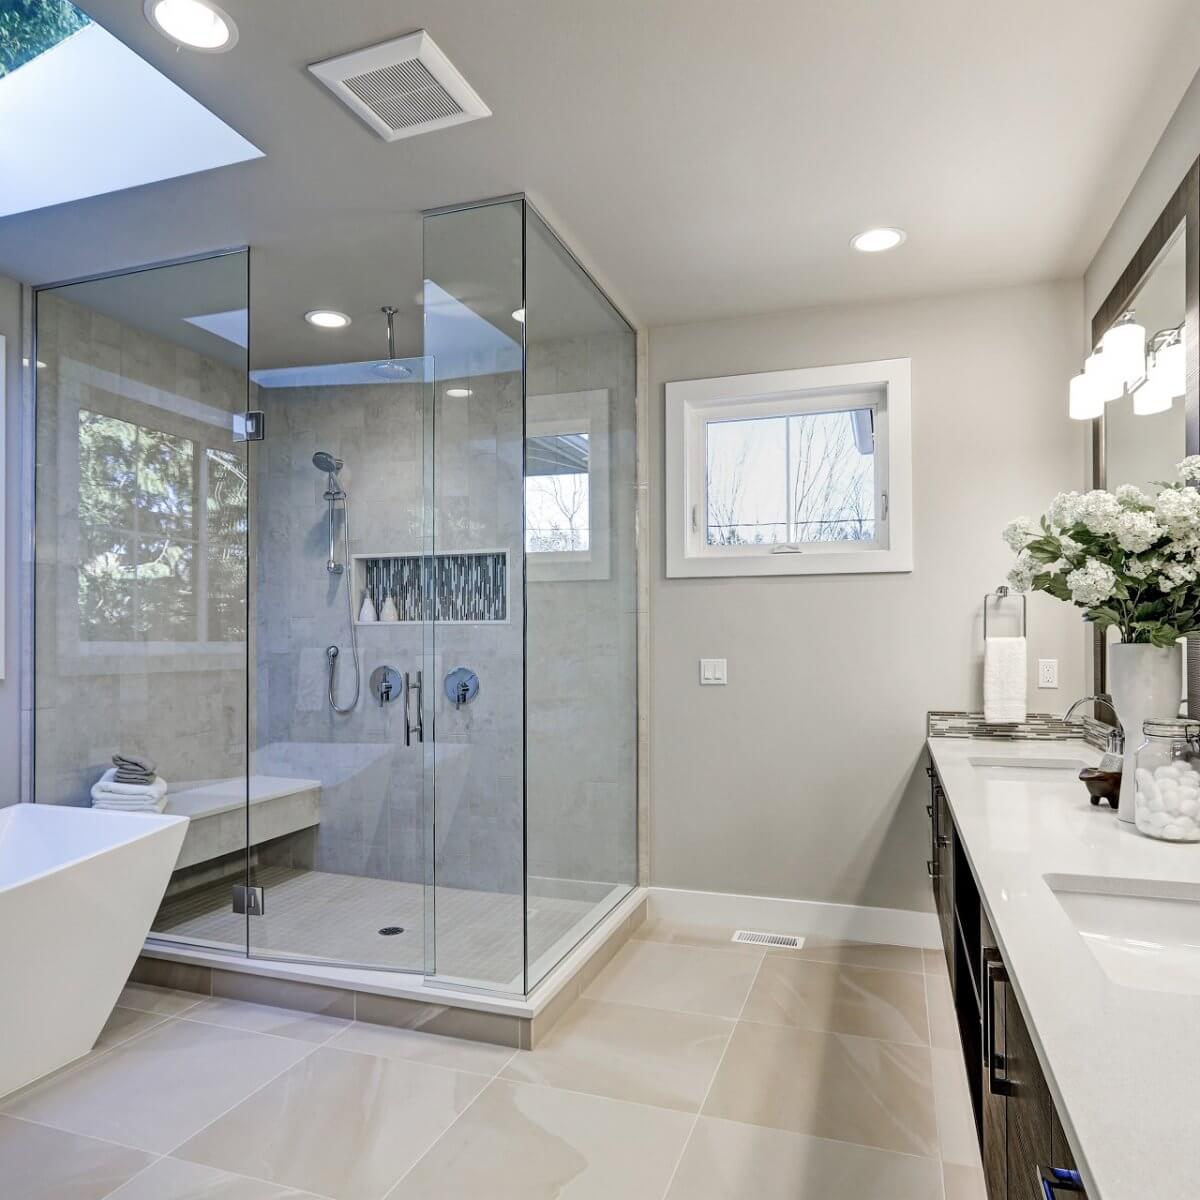 Bathroom Cabinet Design Tool - 21 Bathroom Design Tool Options Free Paid Home Stratosphere : Design ideas for bathroom corner cabinets.